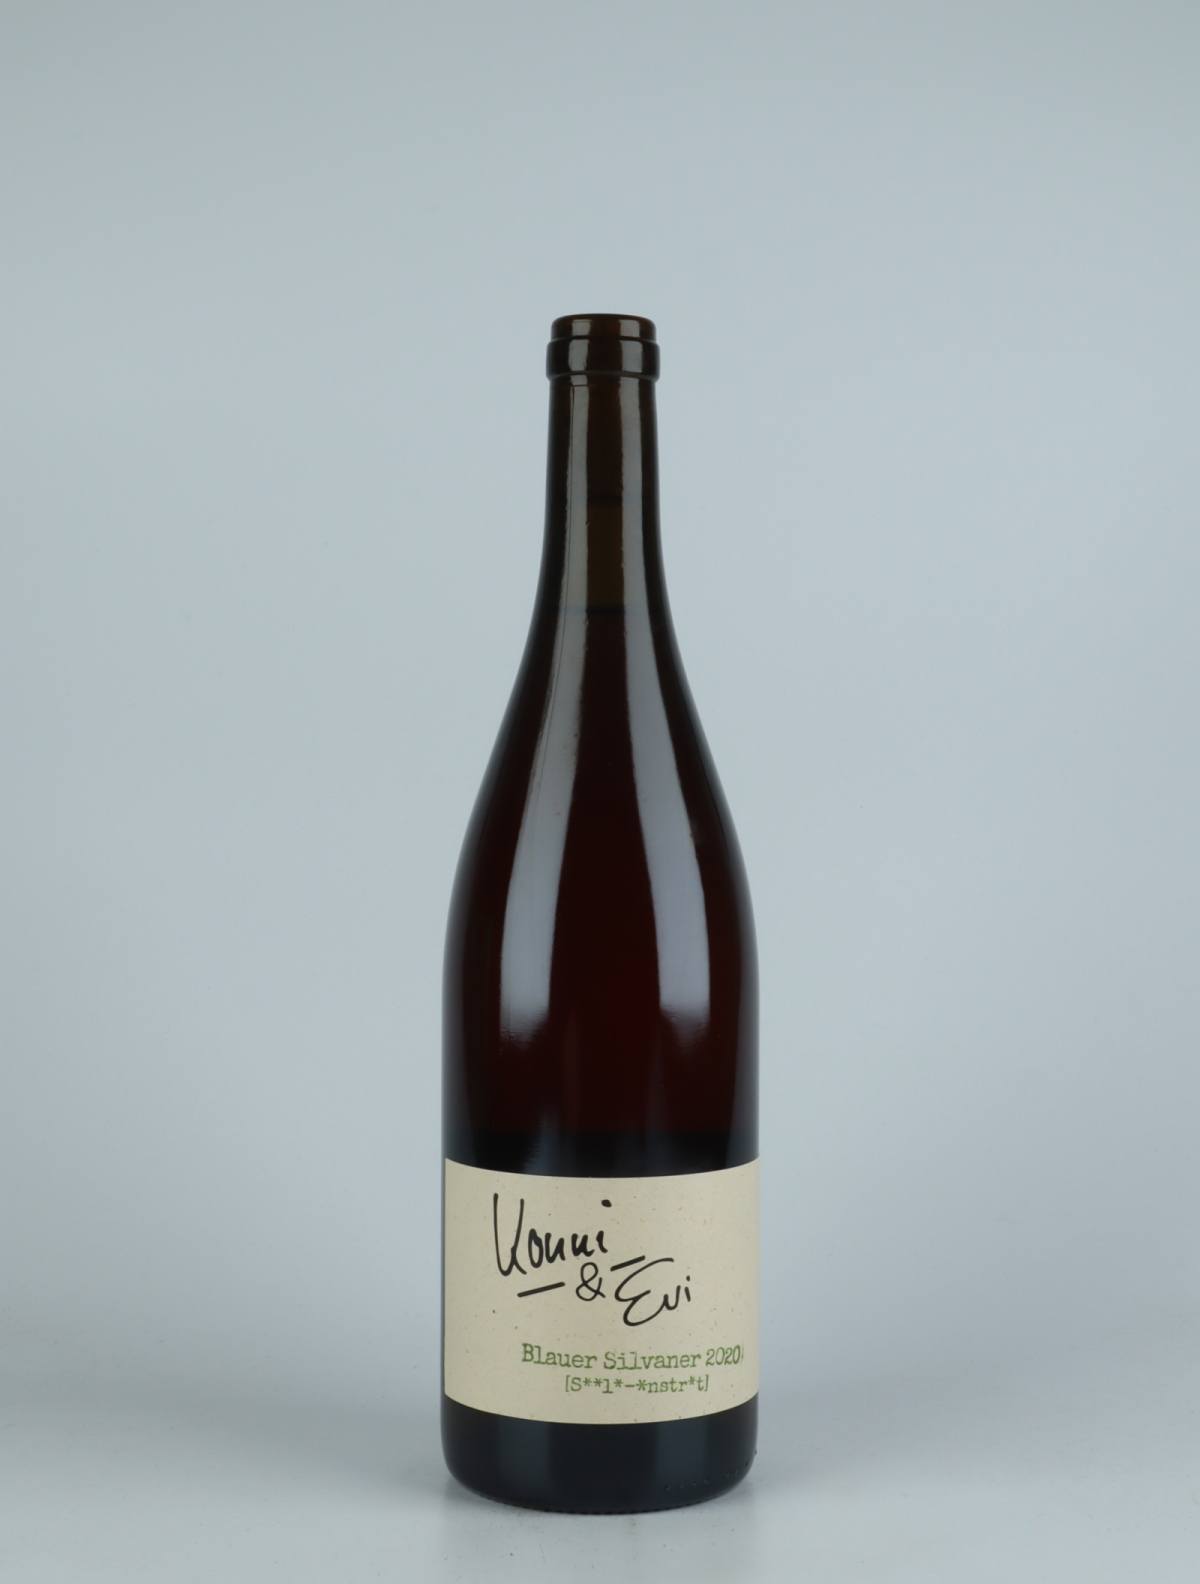 A bottle 2020 Blauer Silvaner Orange wine from Konni & Evi, Saale-Unstrut in Germany